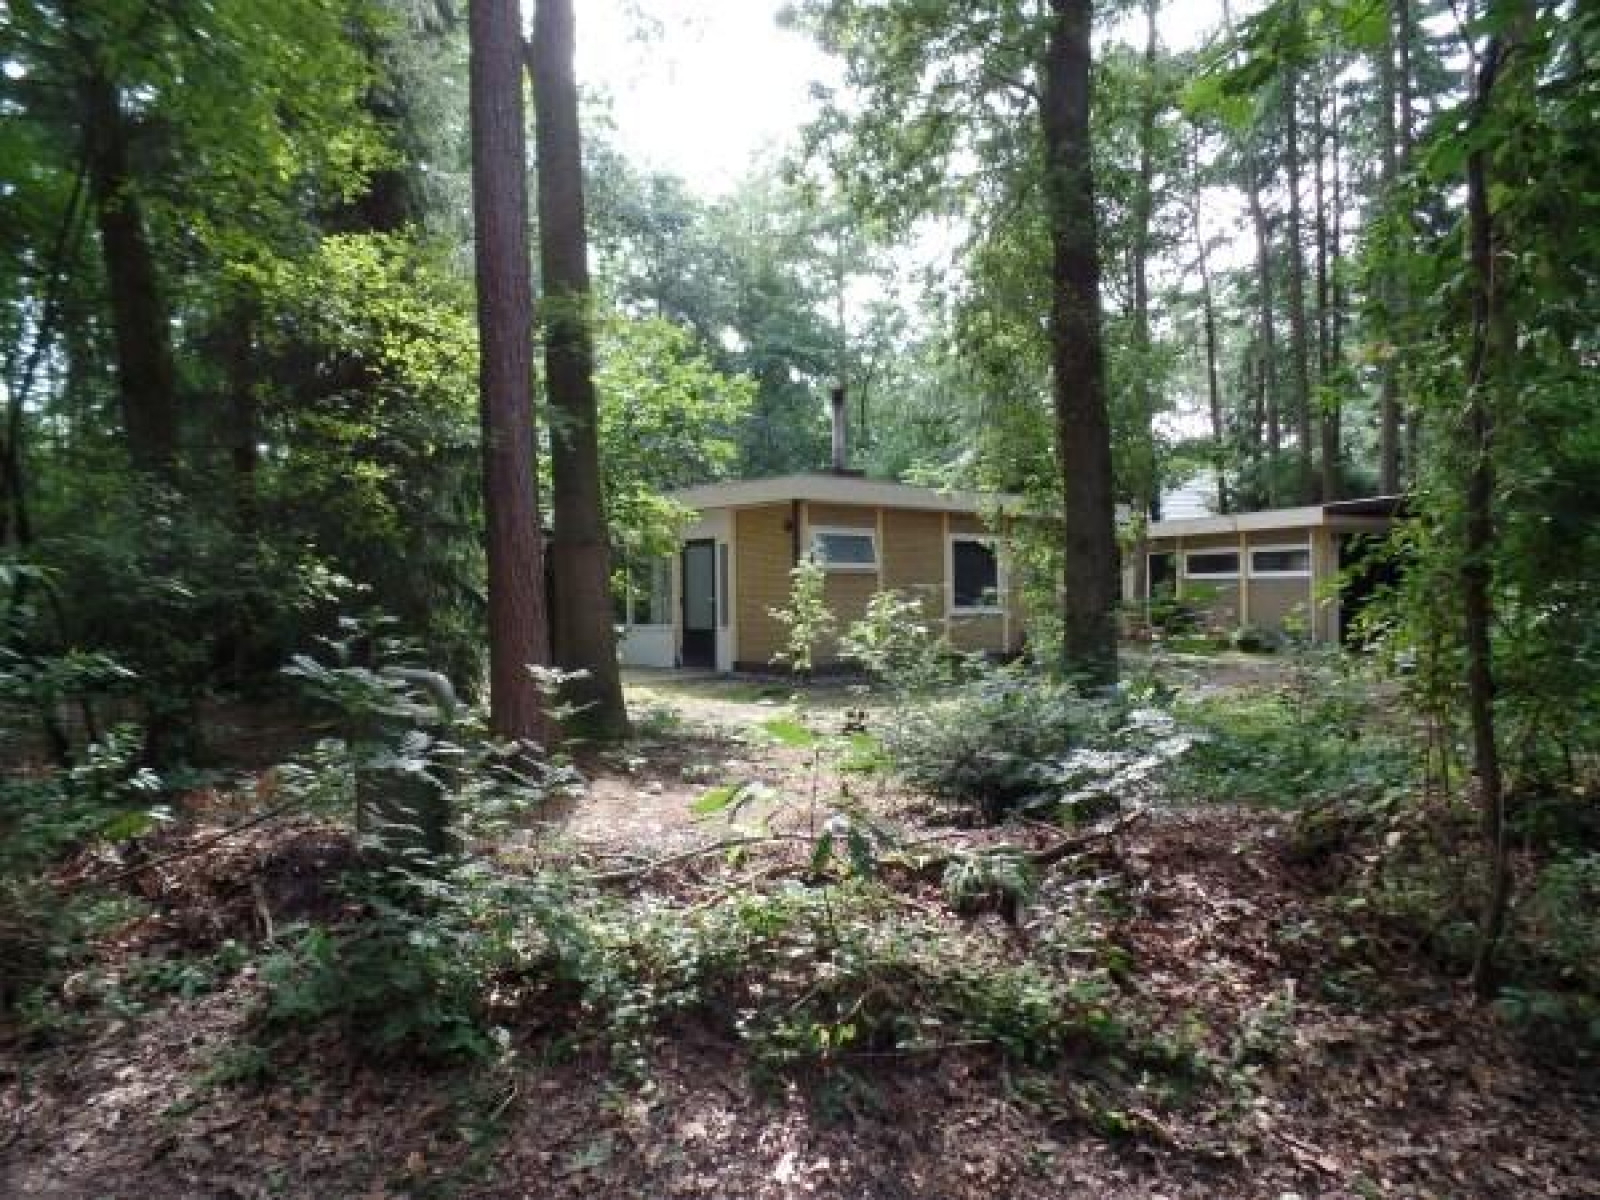 Leuke 4 persoons bungalow op rustige locatie in het bos